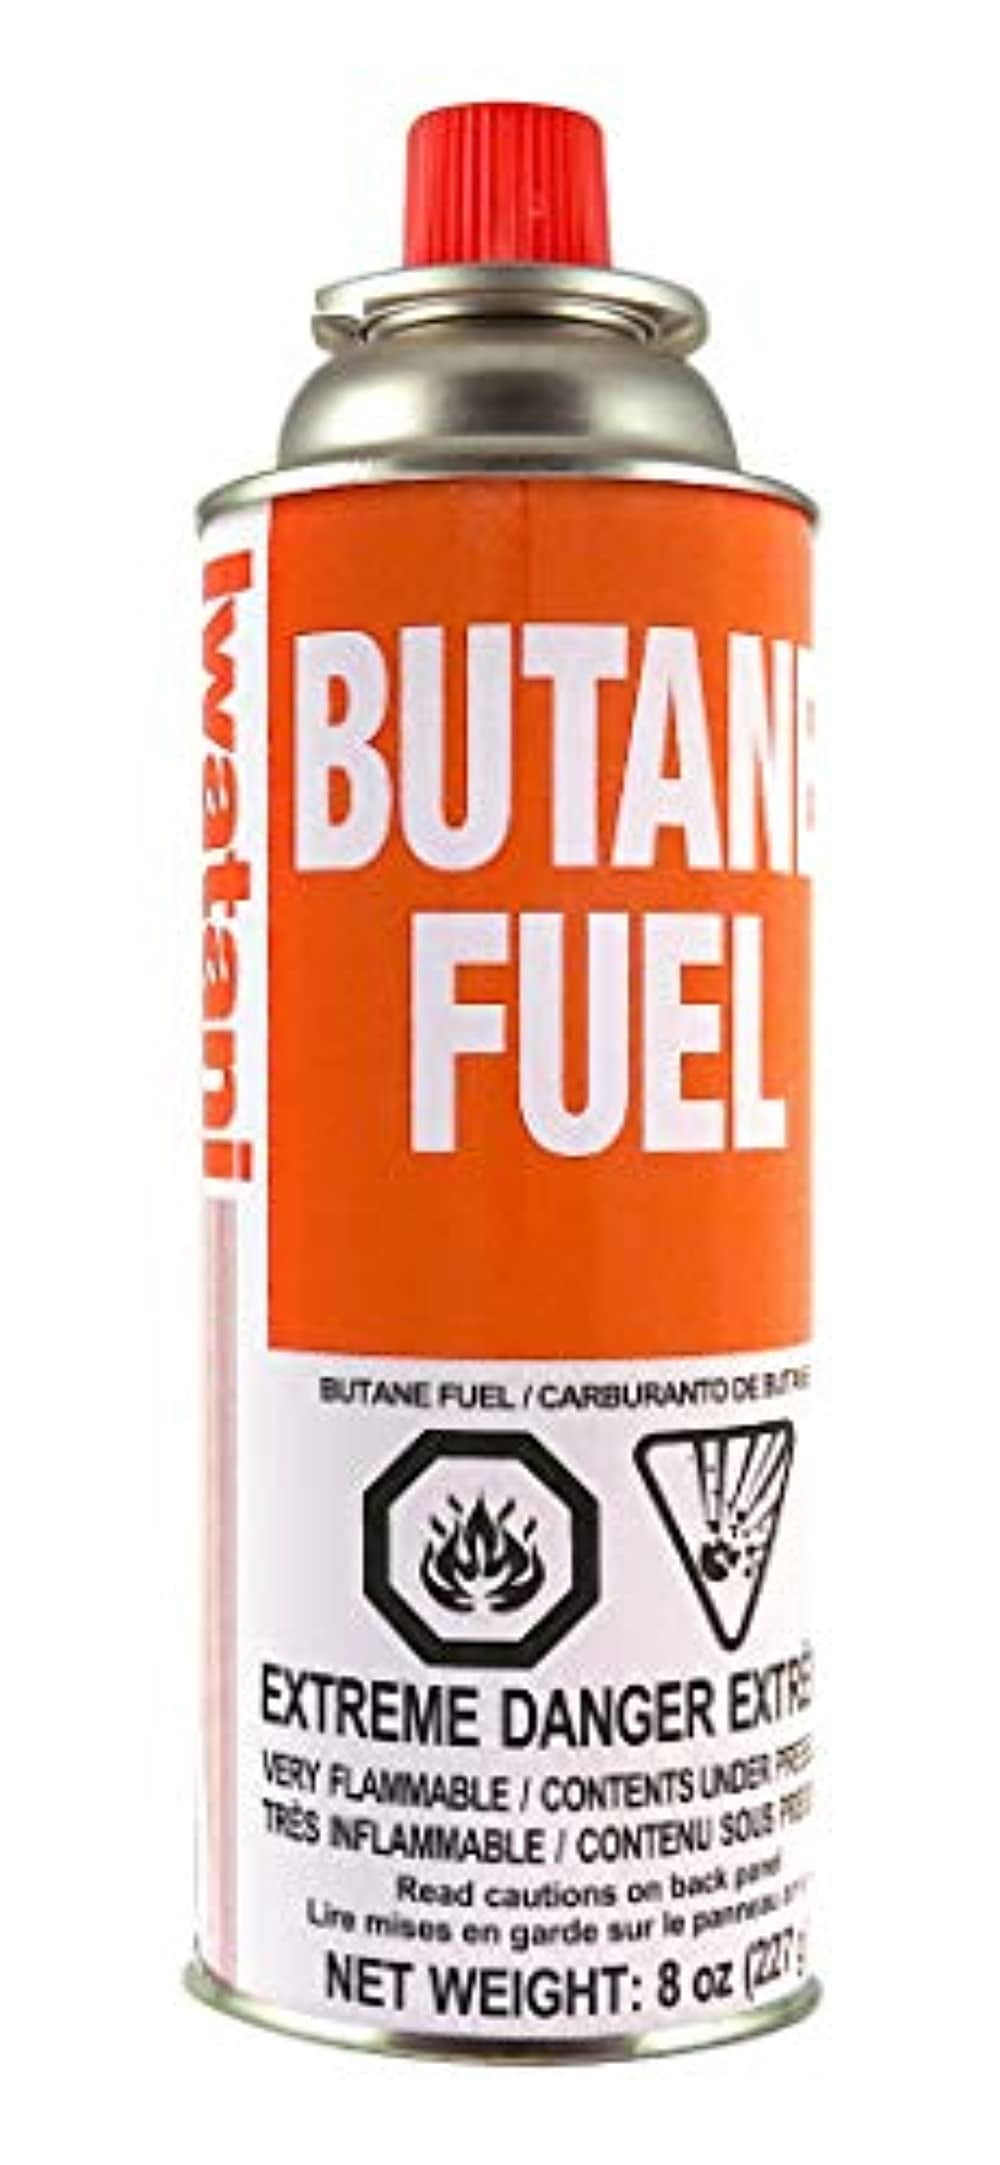 Iwatani Butane Fuel Can, 8 oz, 12/Carton